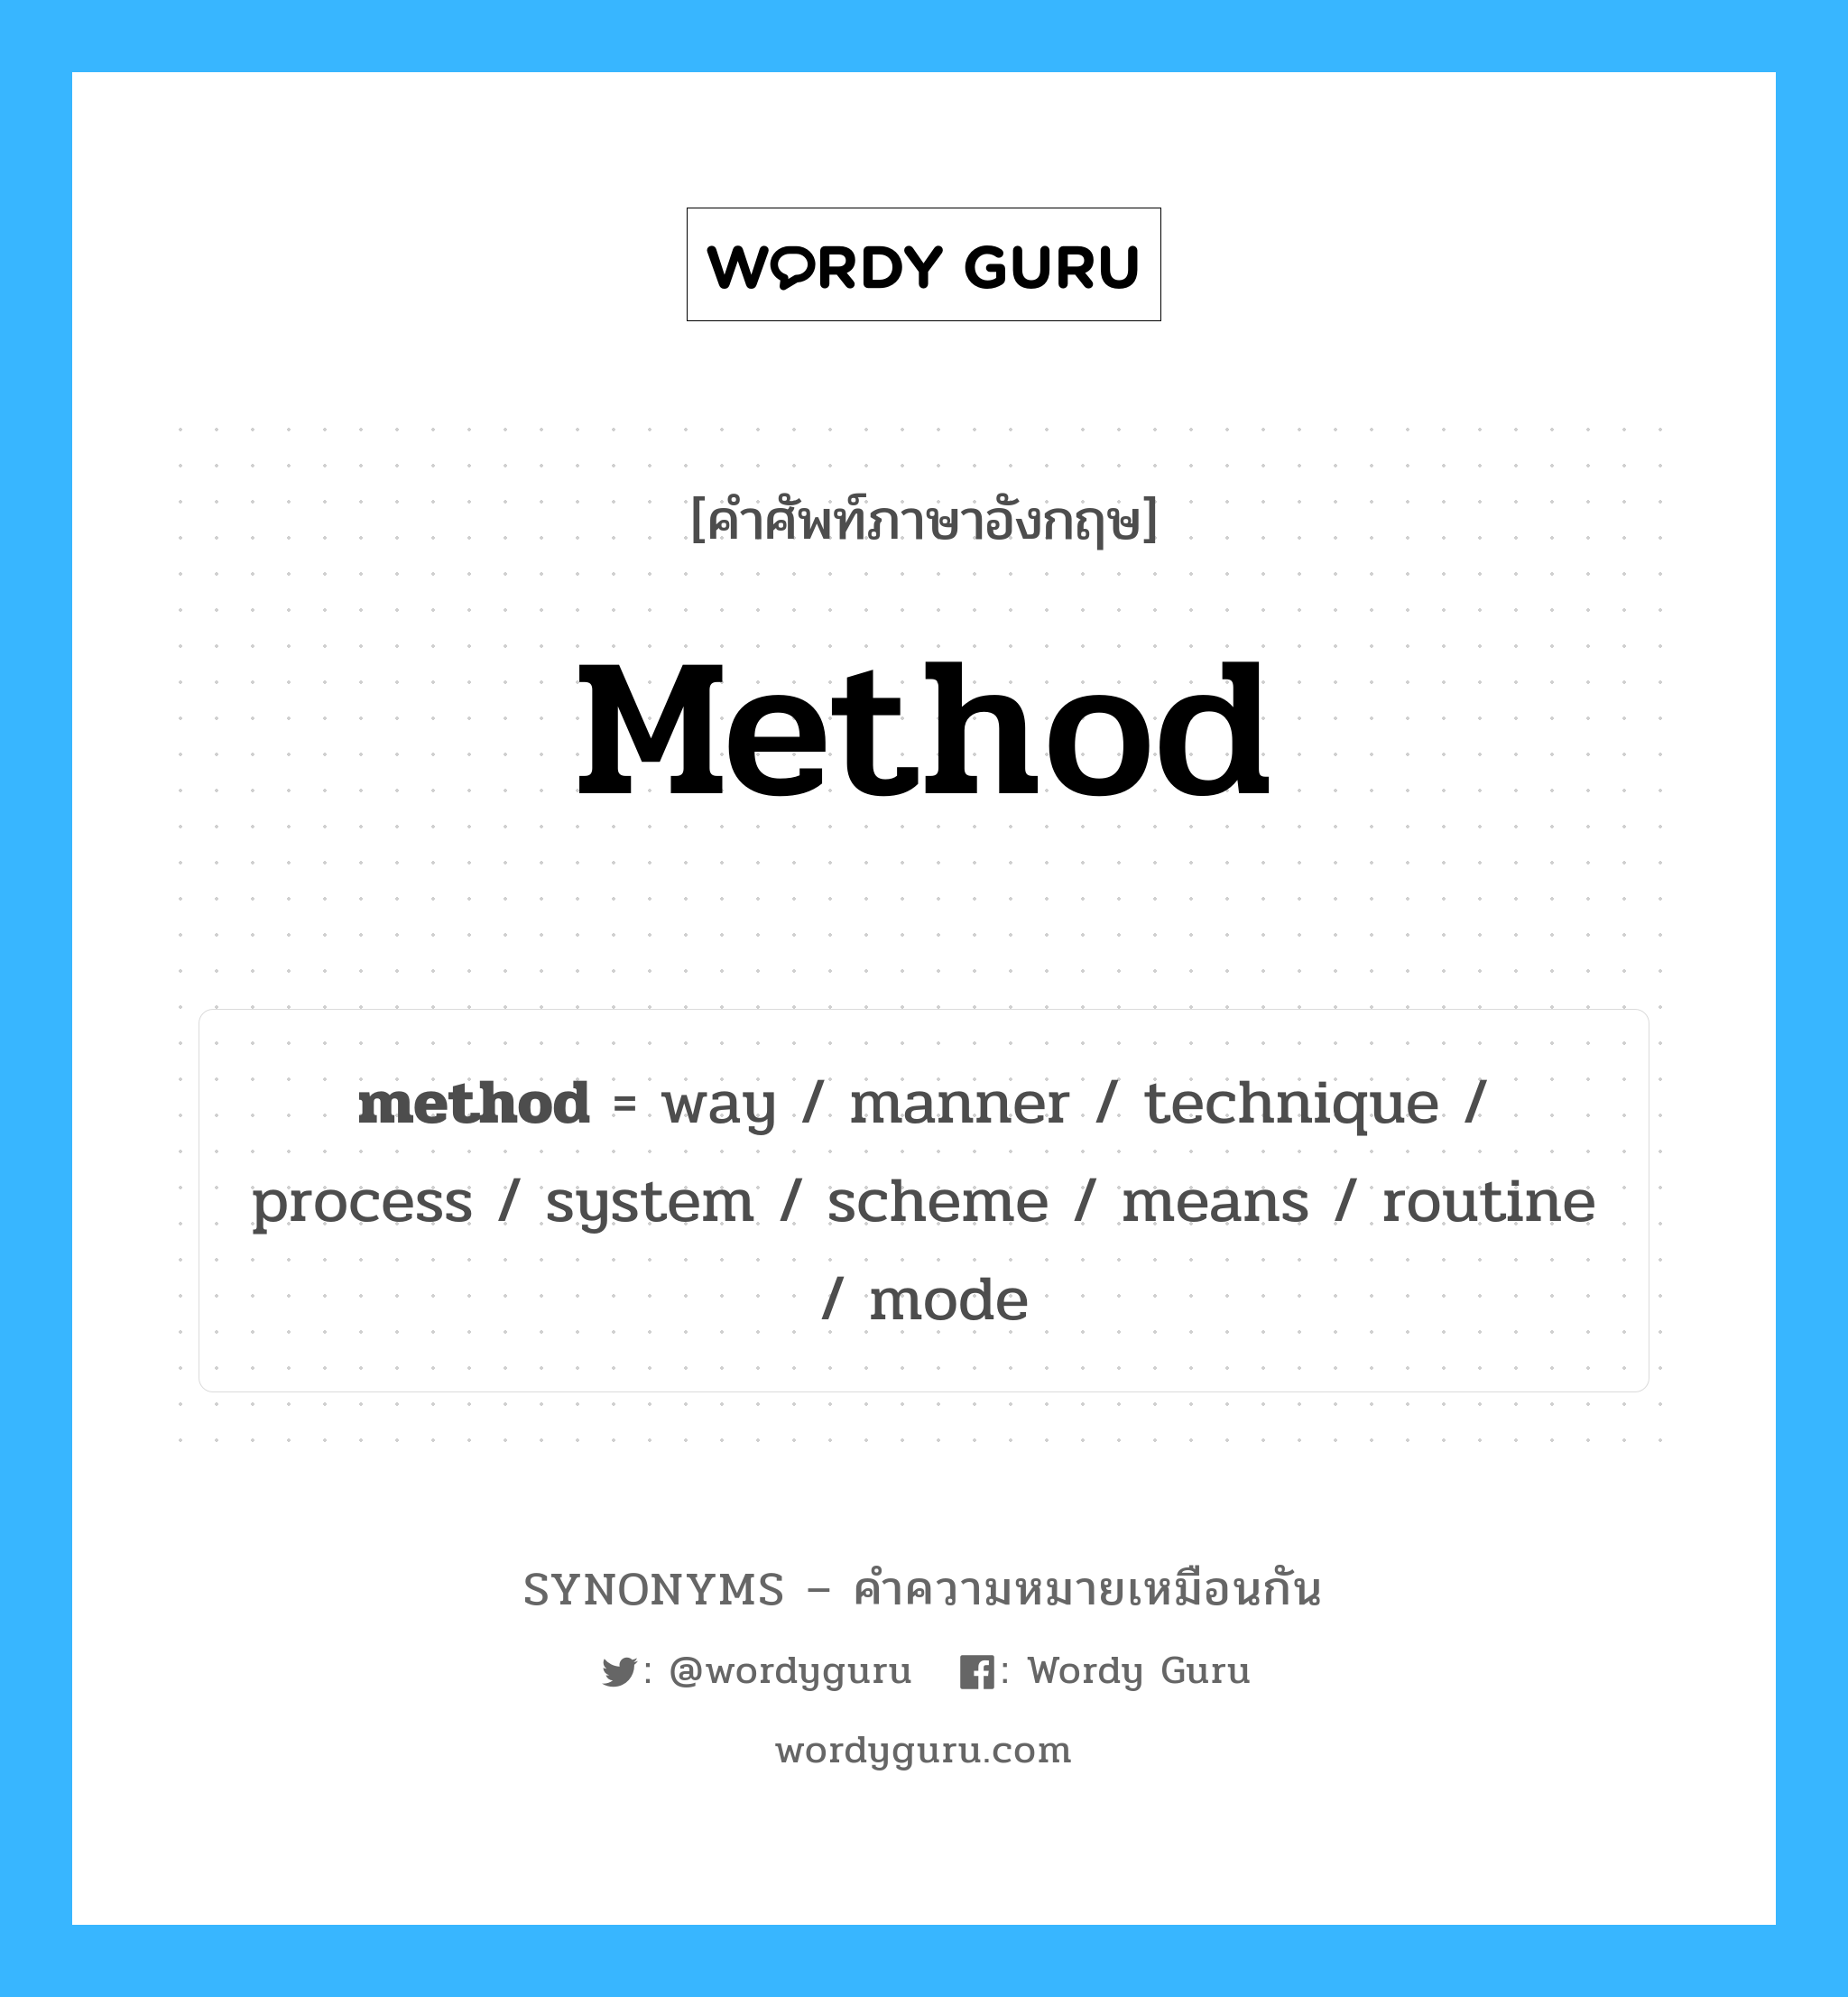 routine เป็นหนึ่งใน method และมีคำอื่น ๆ อีกดังนี้, คำศัพท์ภาษาอังกฤษ routine ความหมายคล้ายกันกับ method แปลว่า กิจวัตรประจำวัน หมวด method